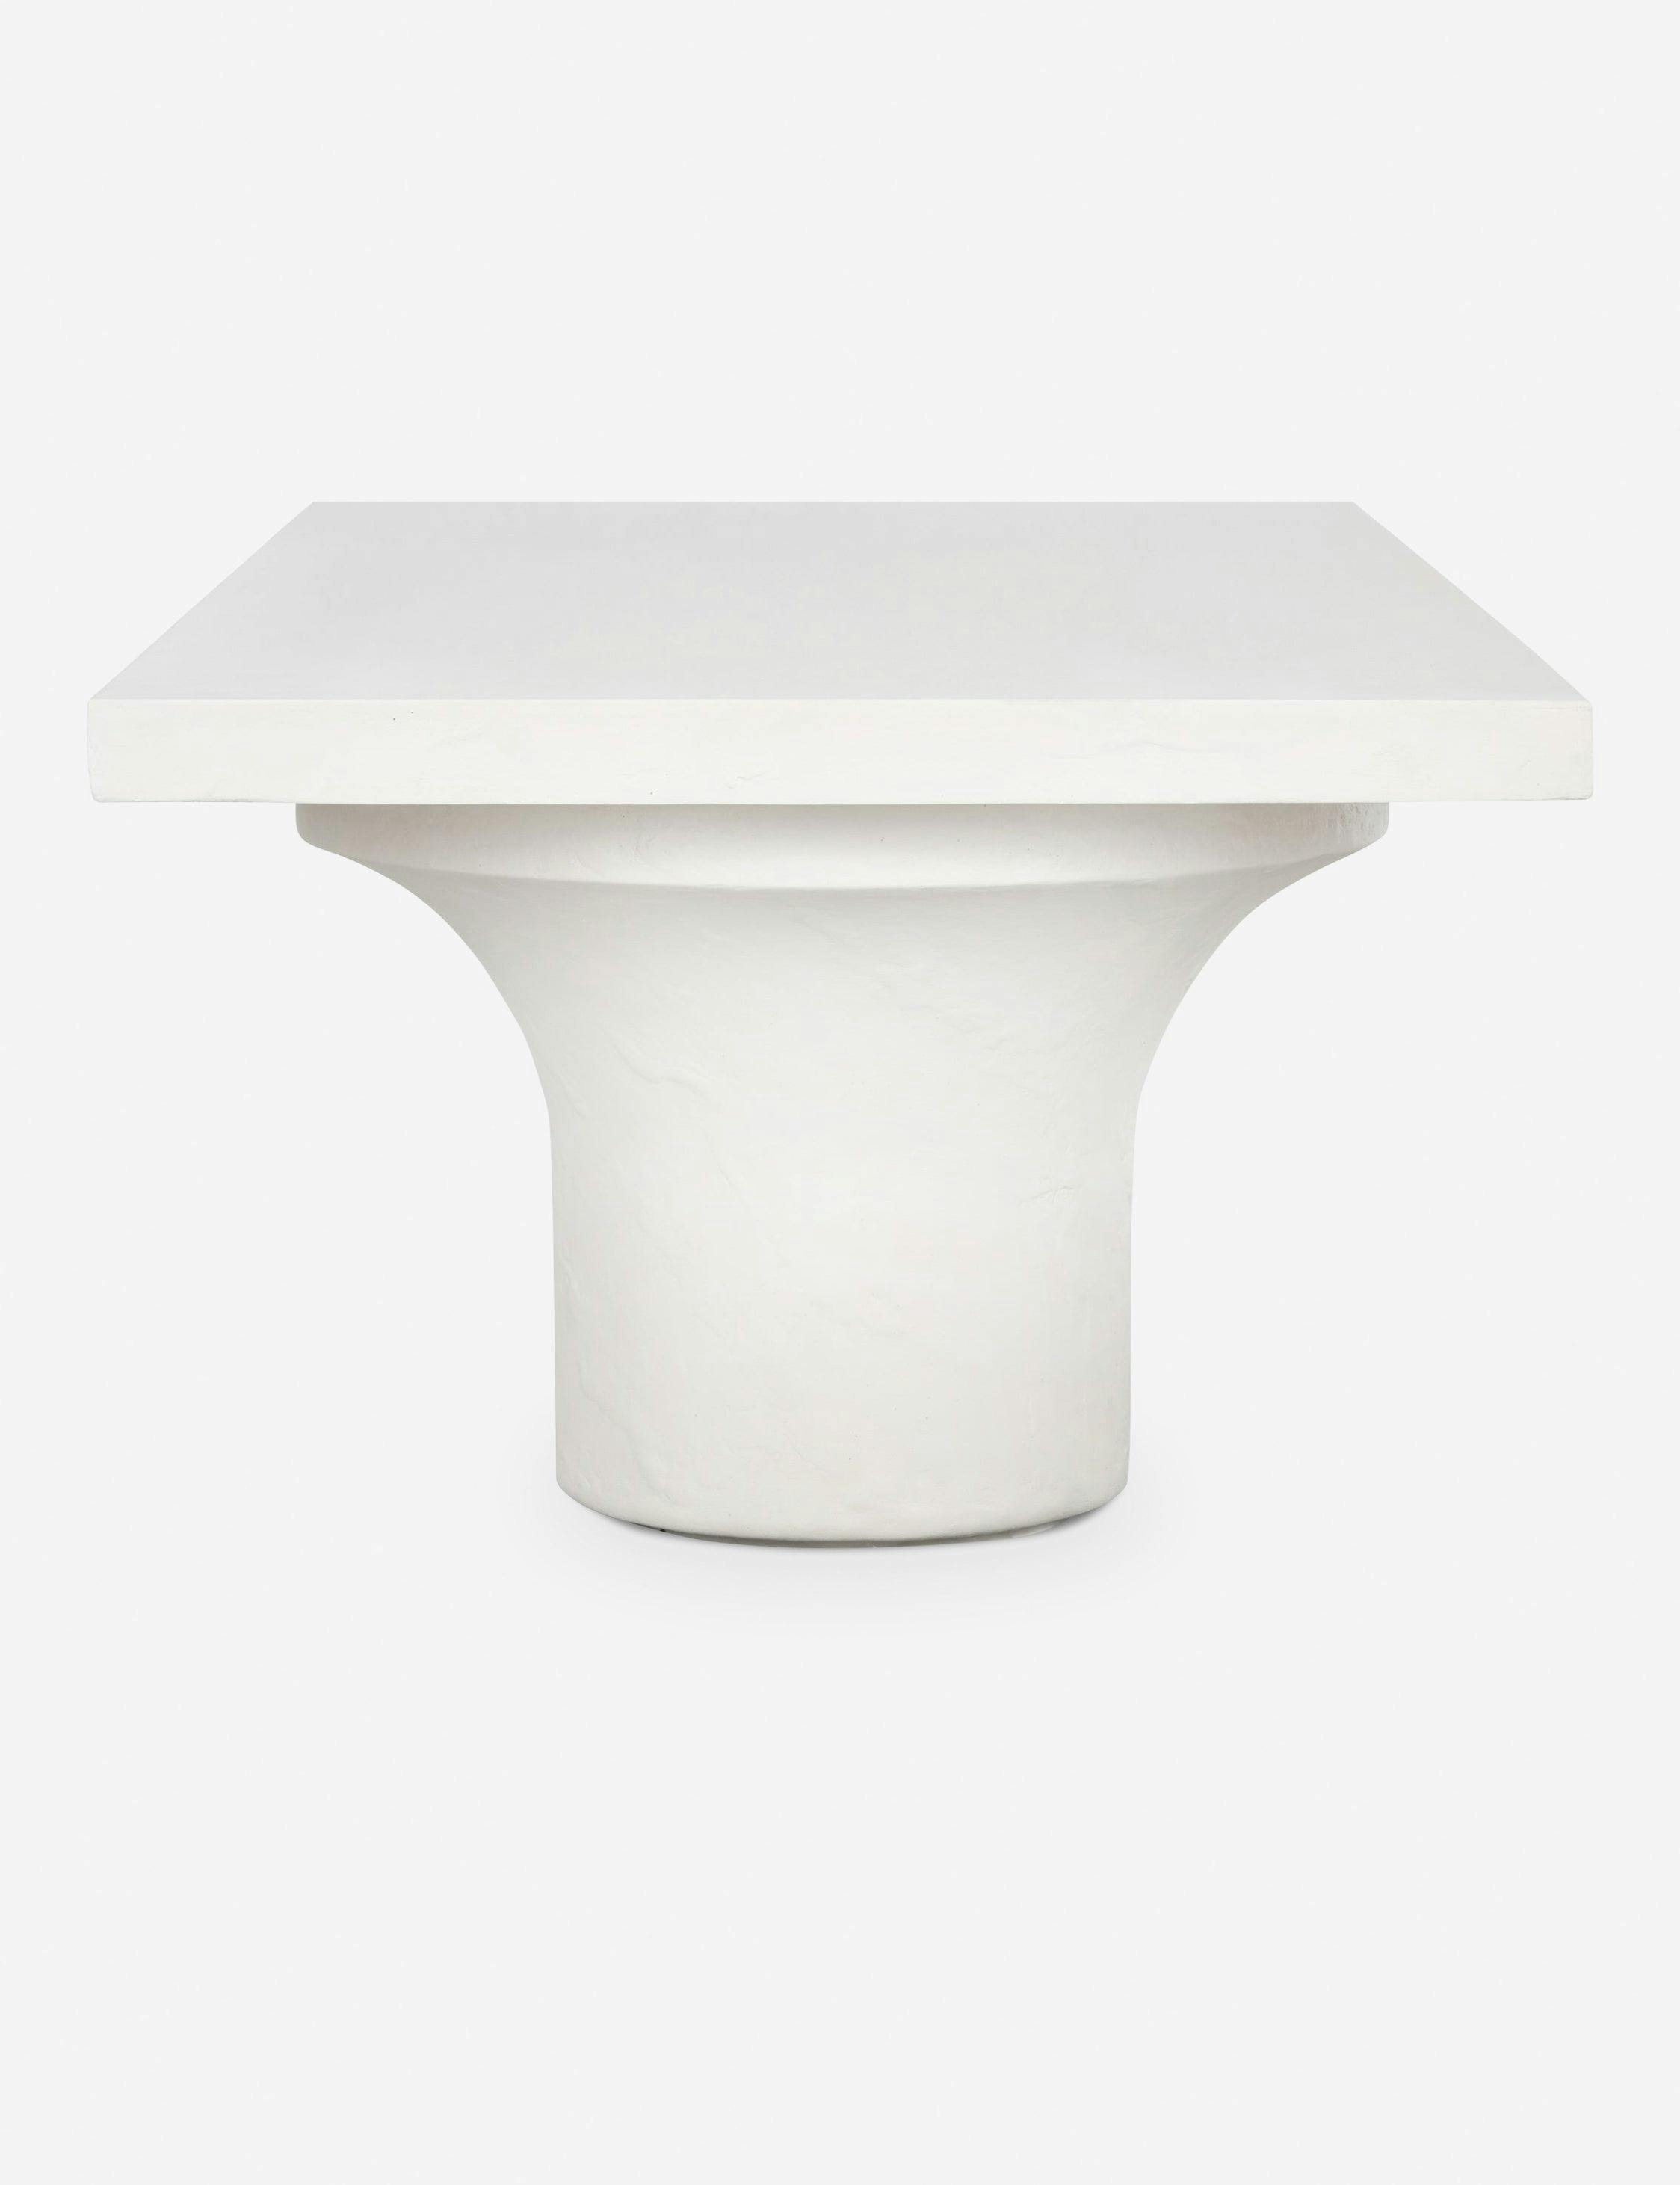 Monolithic Adobe-Inspired White Concrete Rectangular Coffee Table